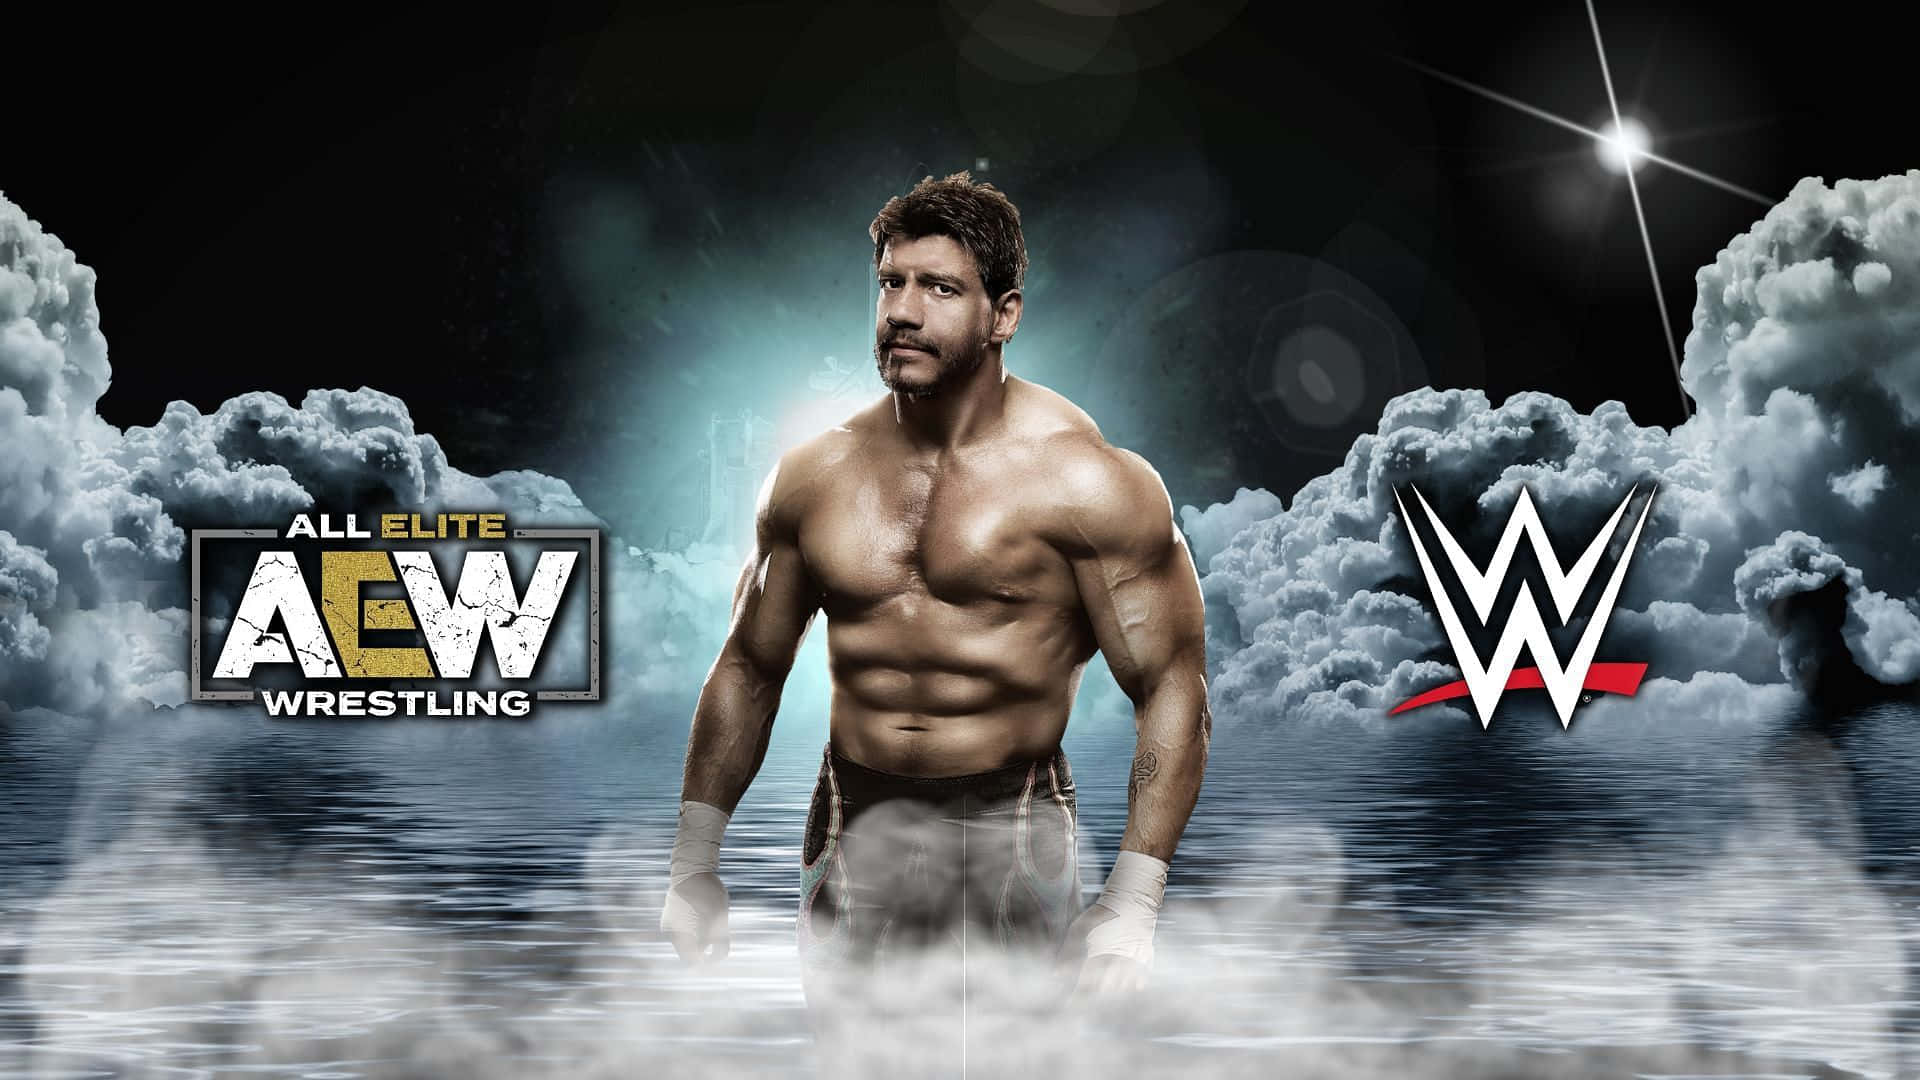 Eddie Guerrero AEW WWE Poster Wallpaper